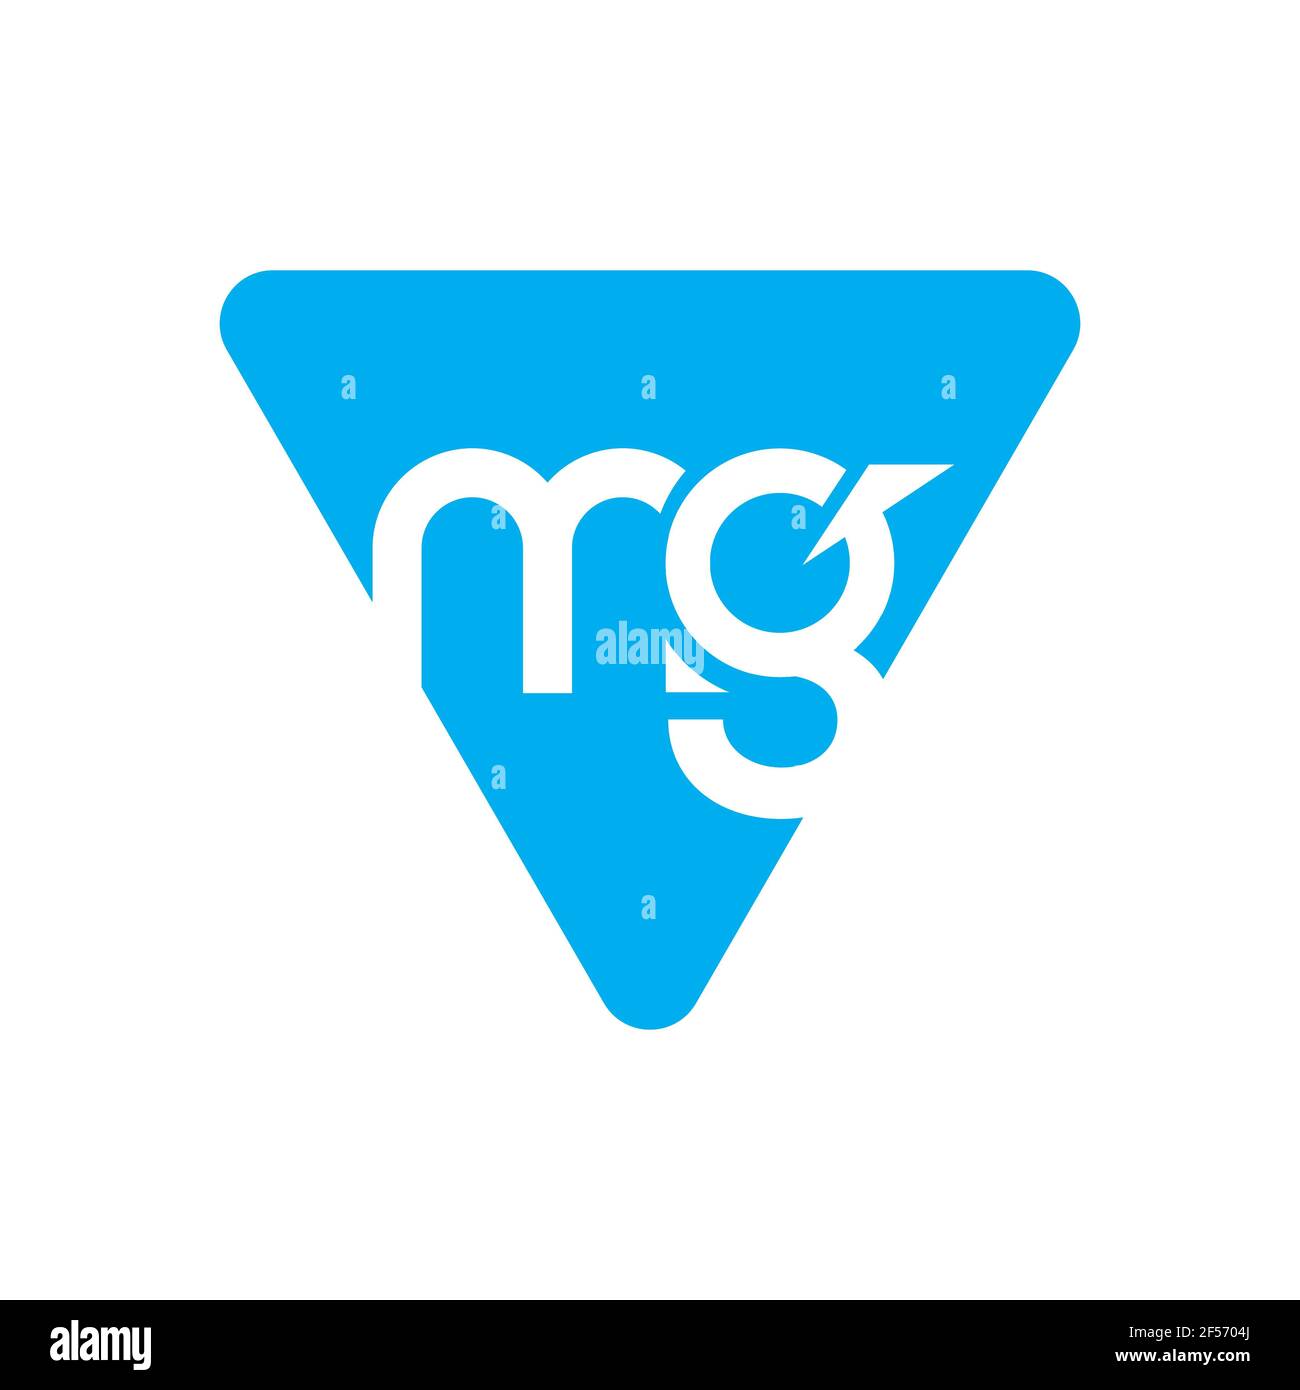 Exclusive Logo 126897, Mg Or Gm Monogram Logo